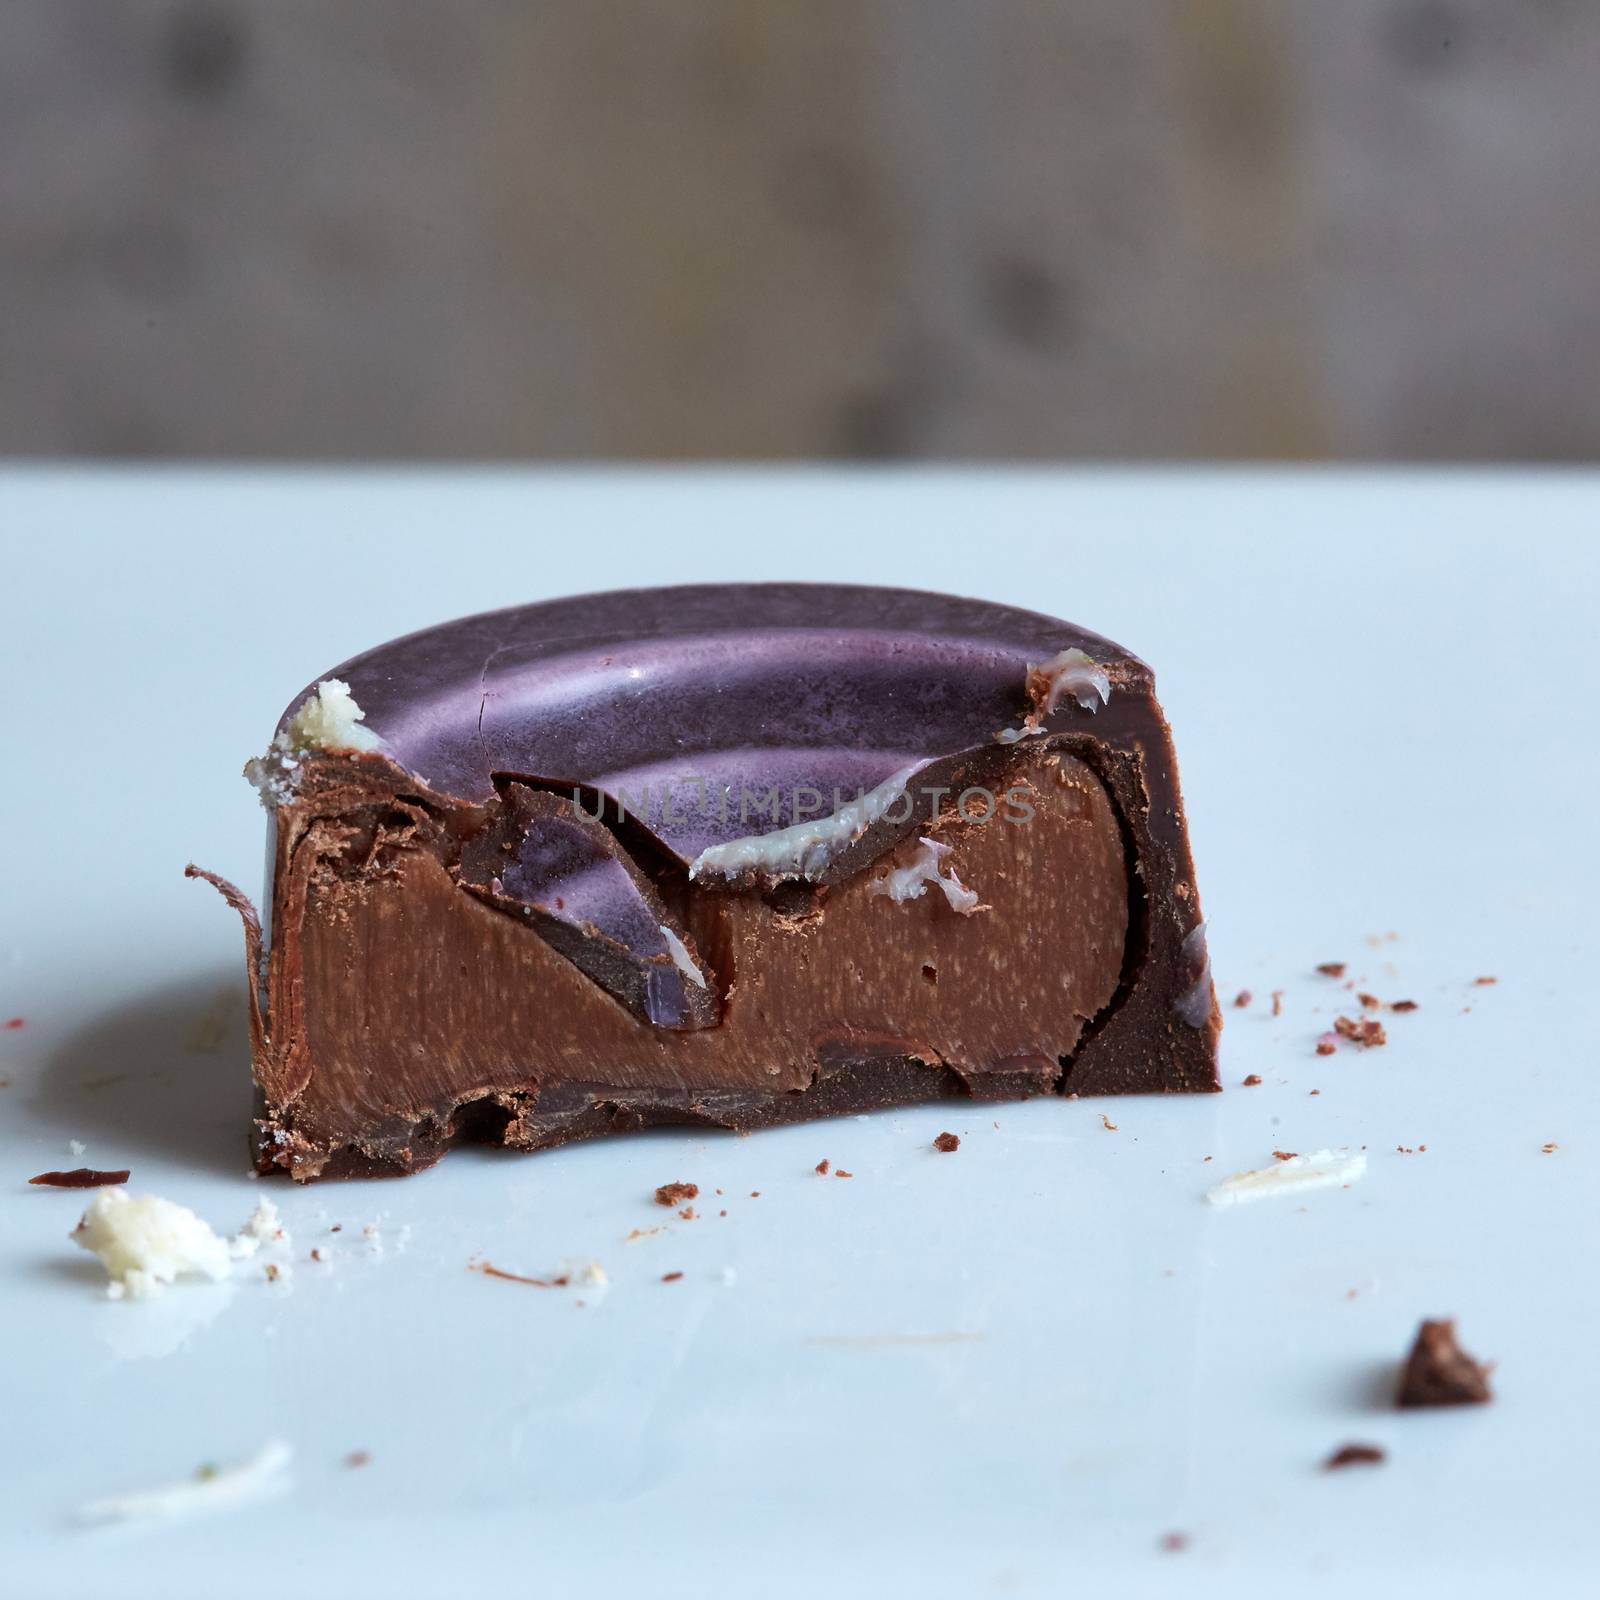 The handmade chocolate sweet. Shallow dof. Closeup